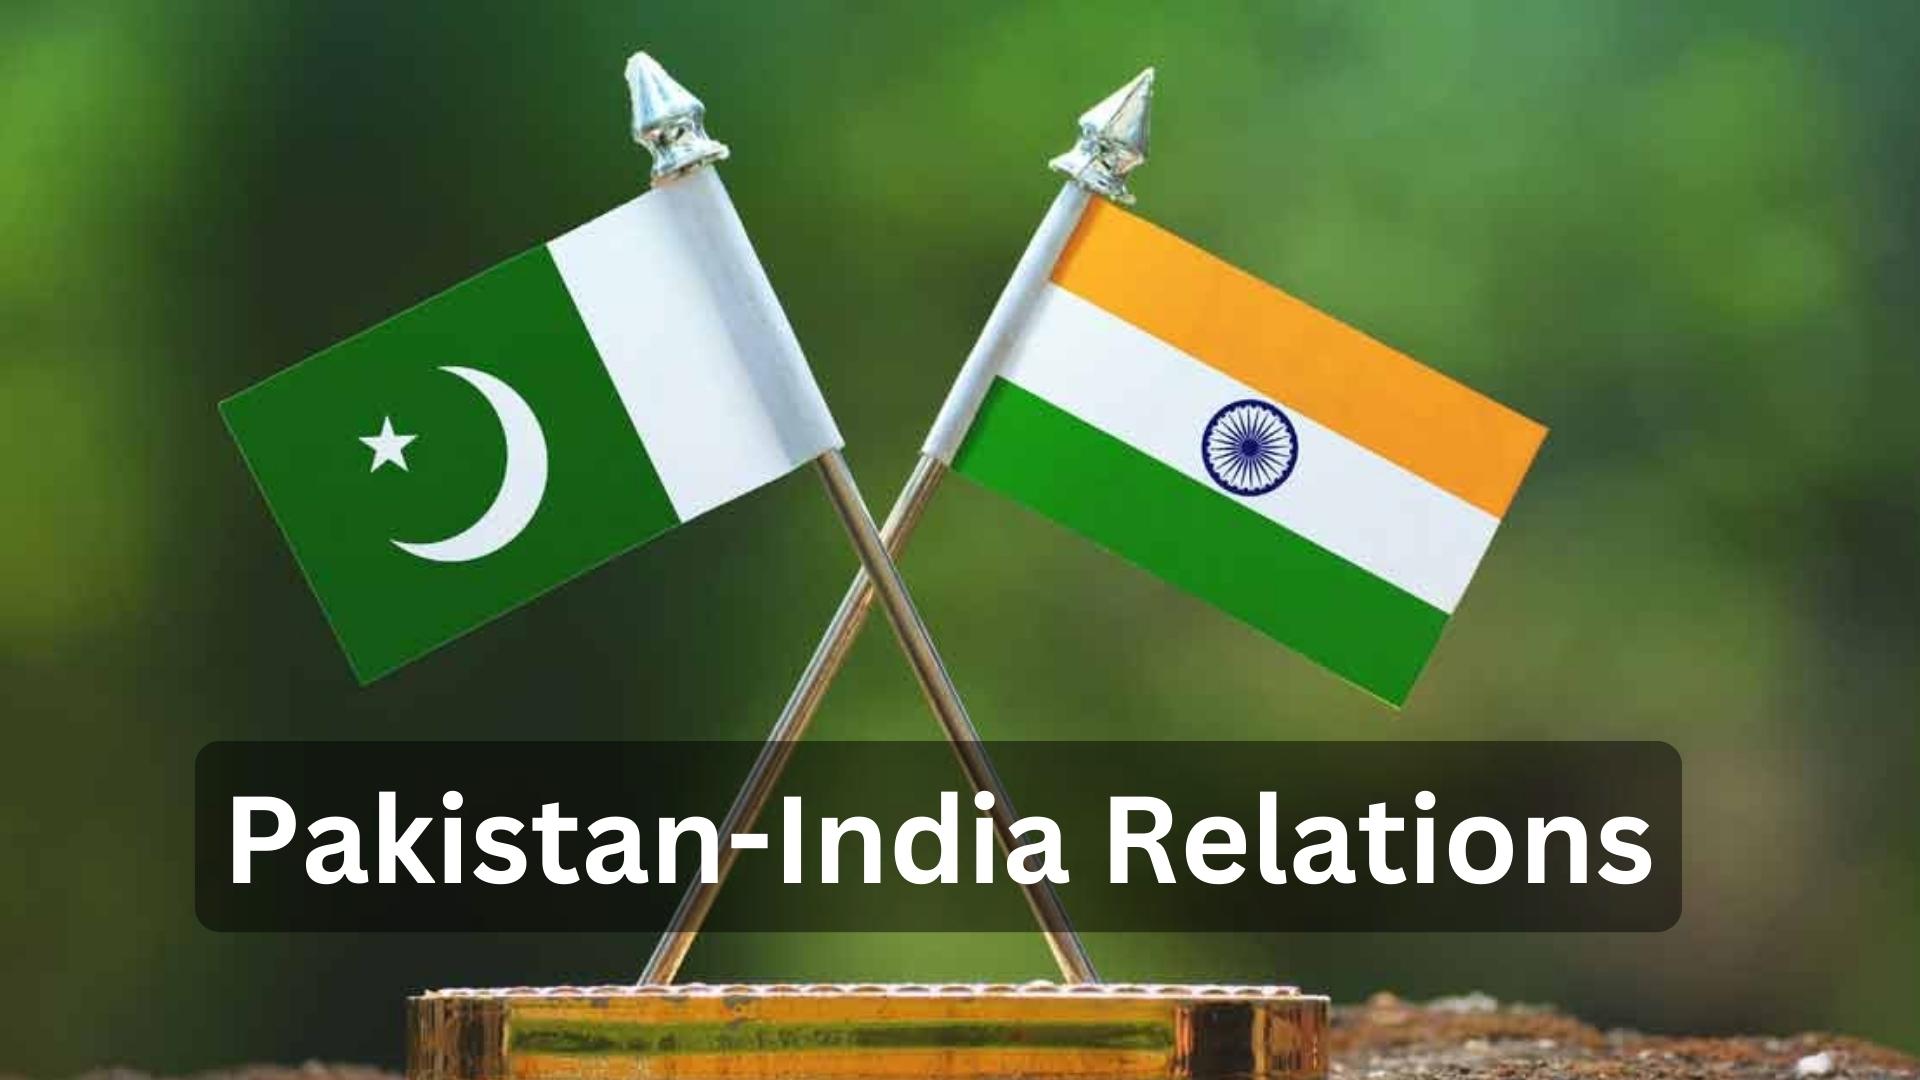 Pakistan-India Relations